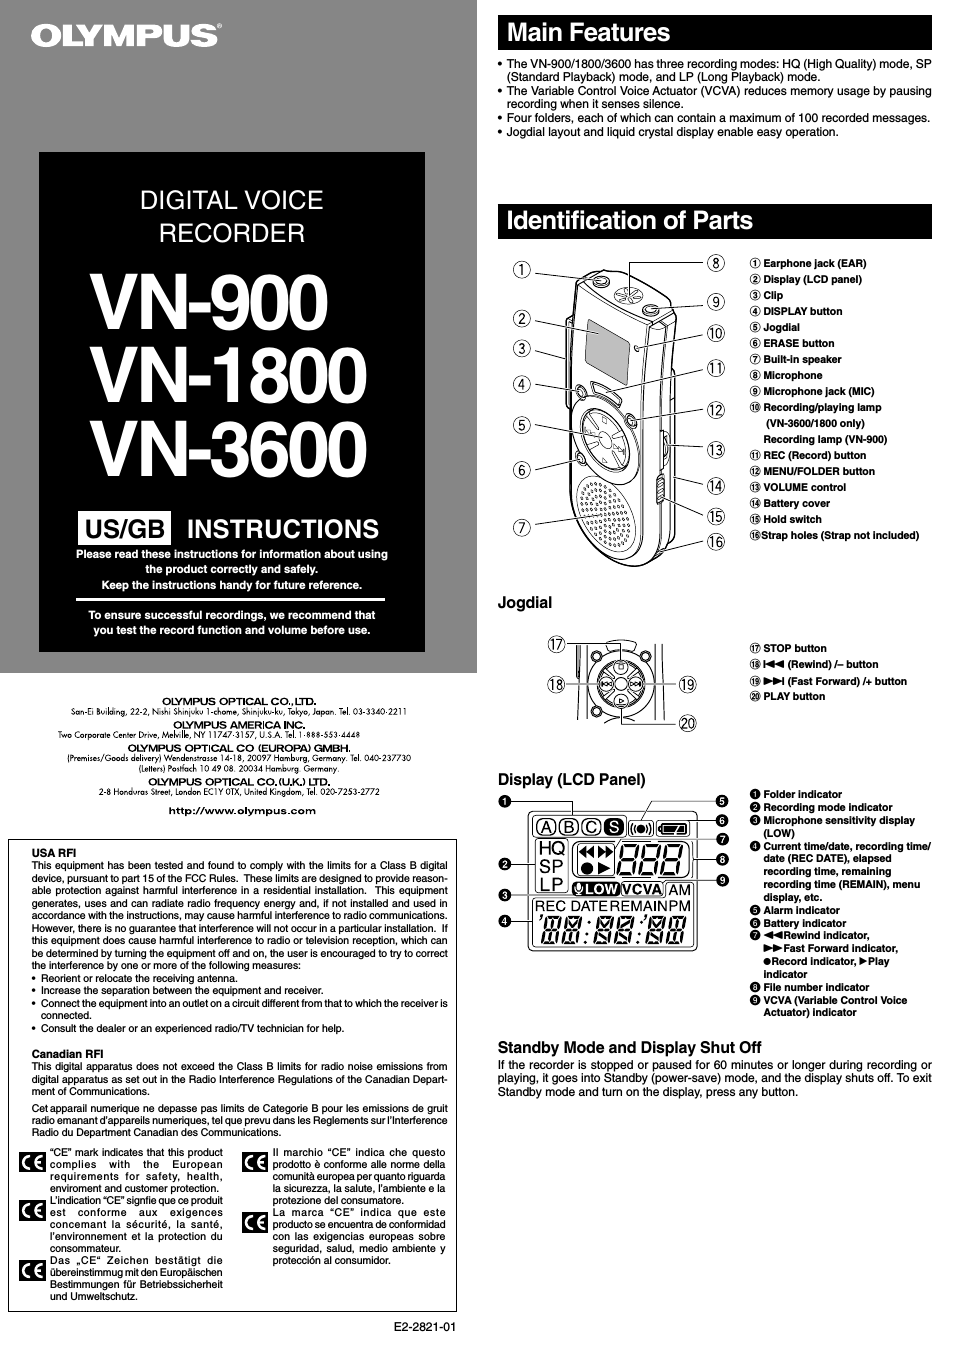 VN-3600 Digital Voice Recorder